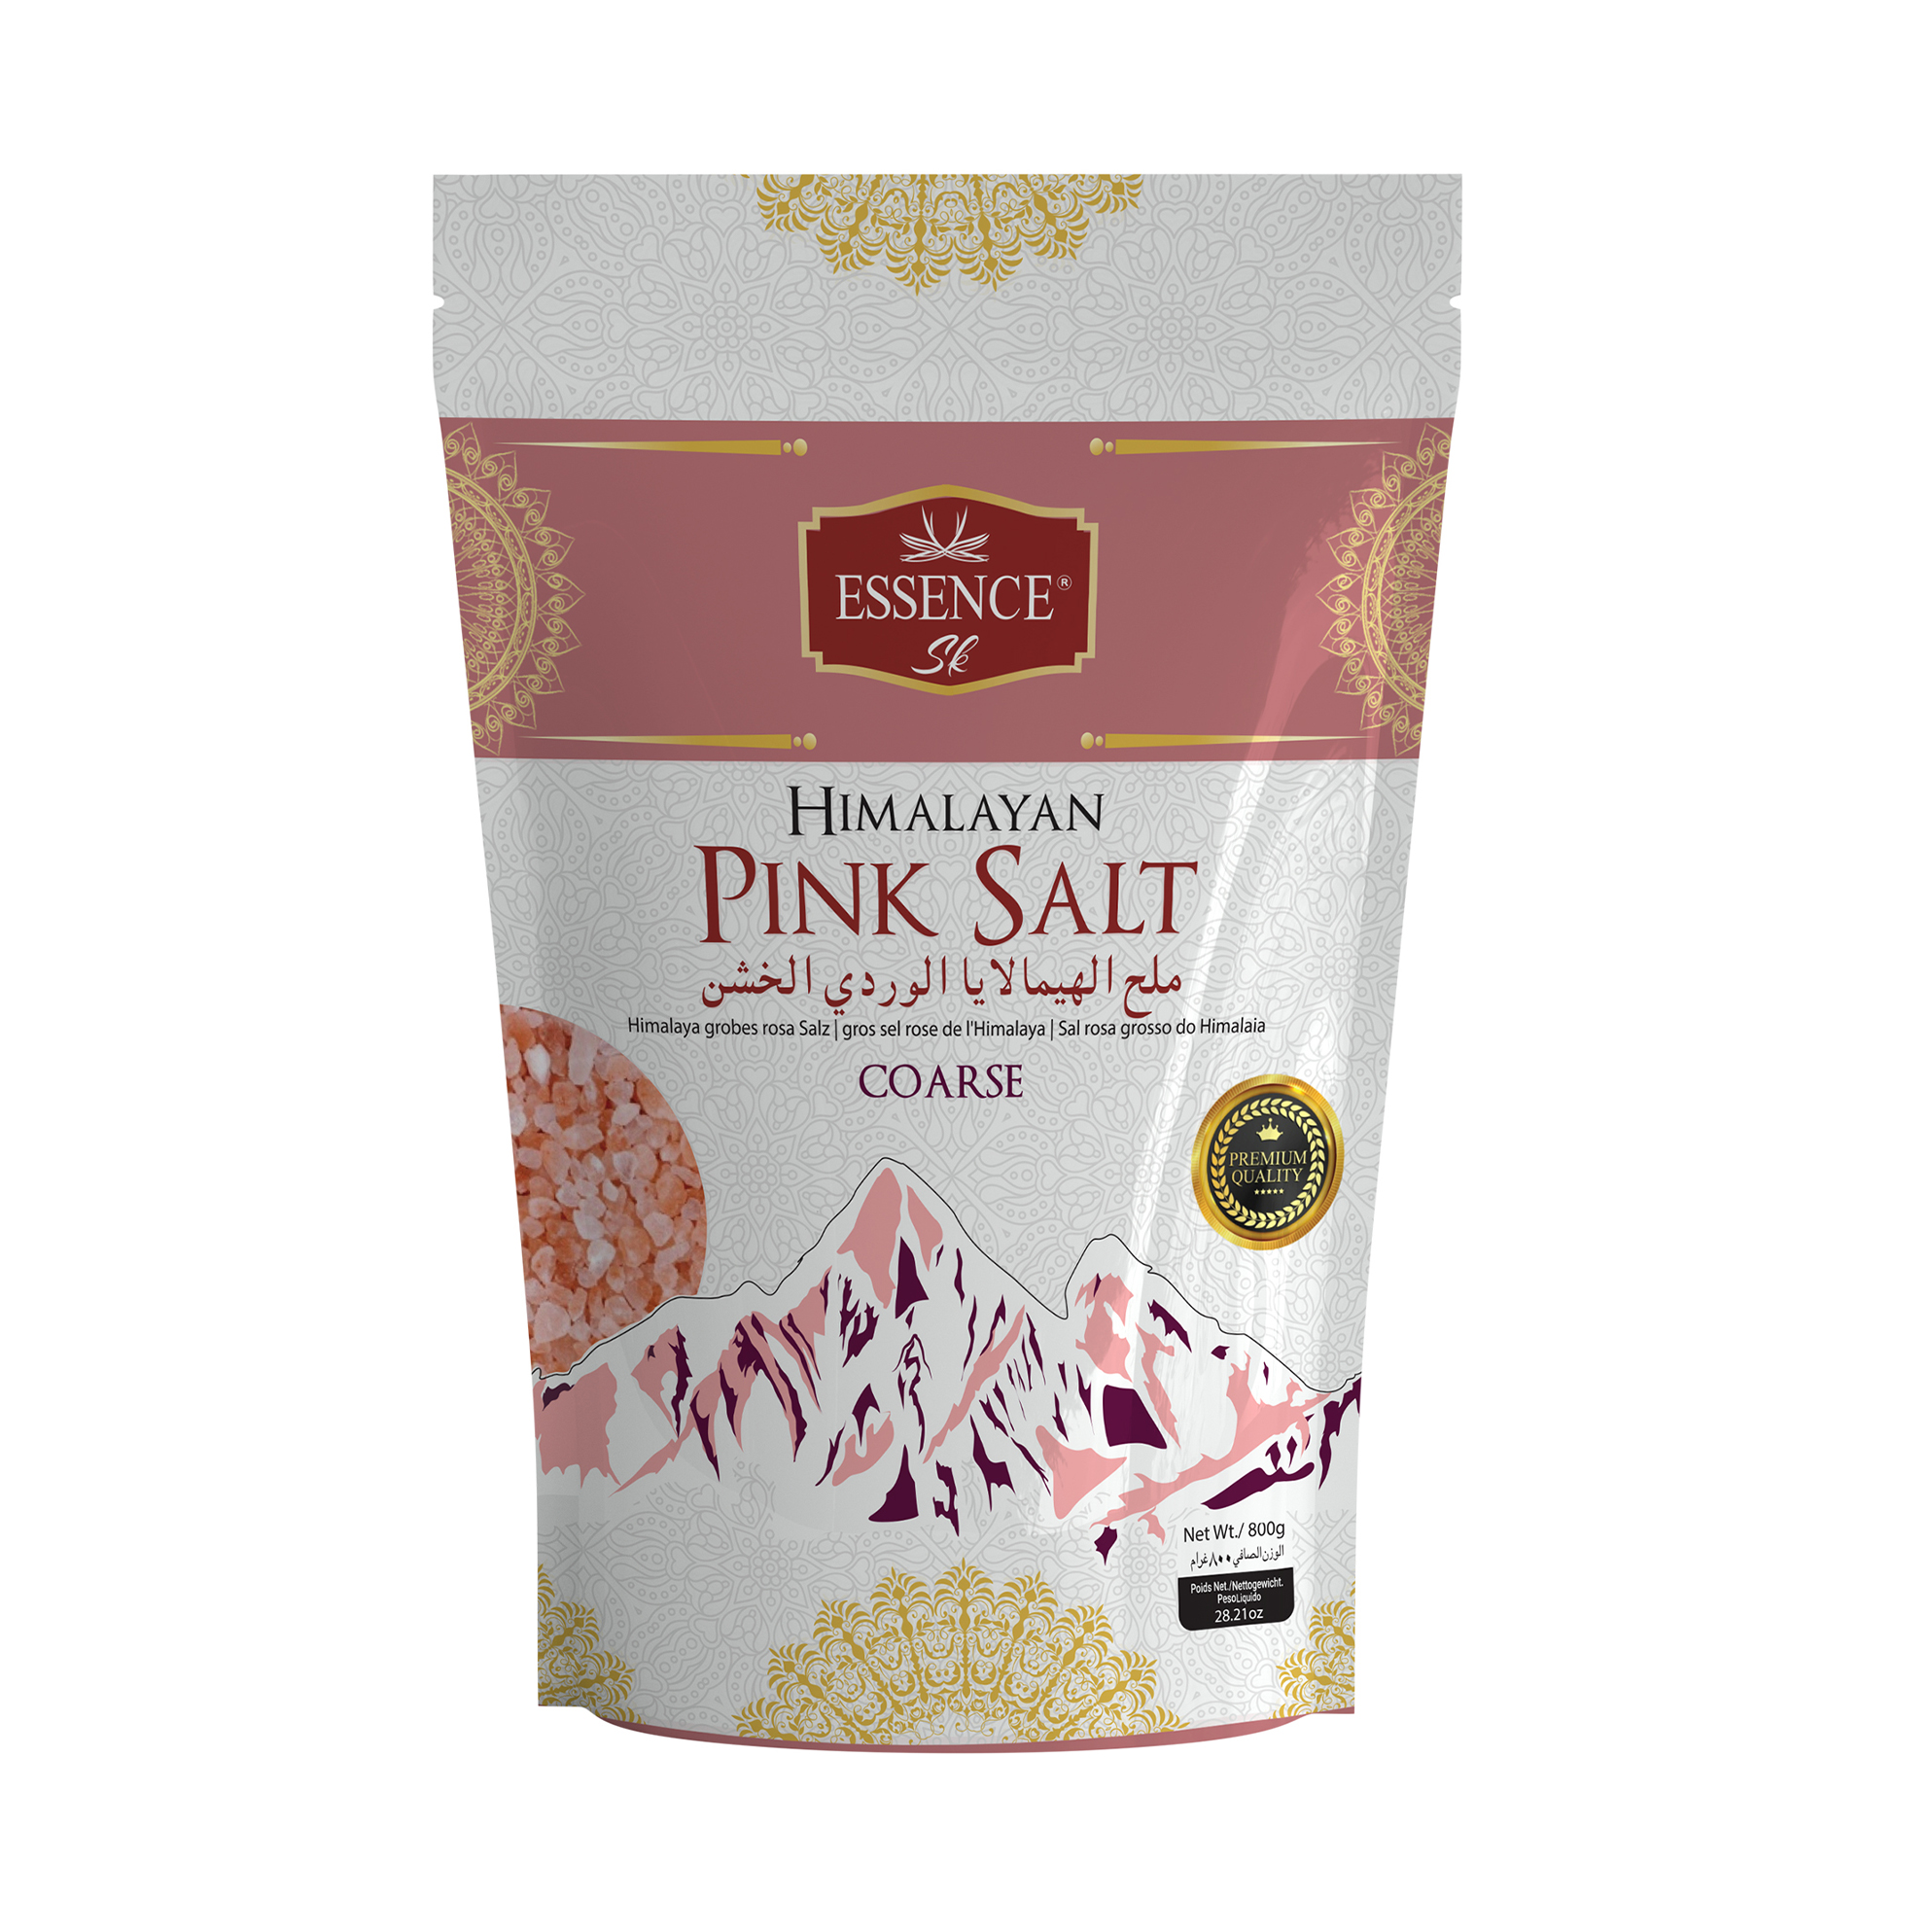 Himalayan pink salt 800g standup pouch coarse